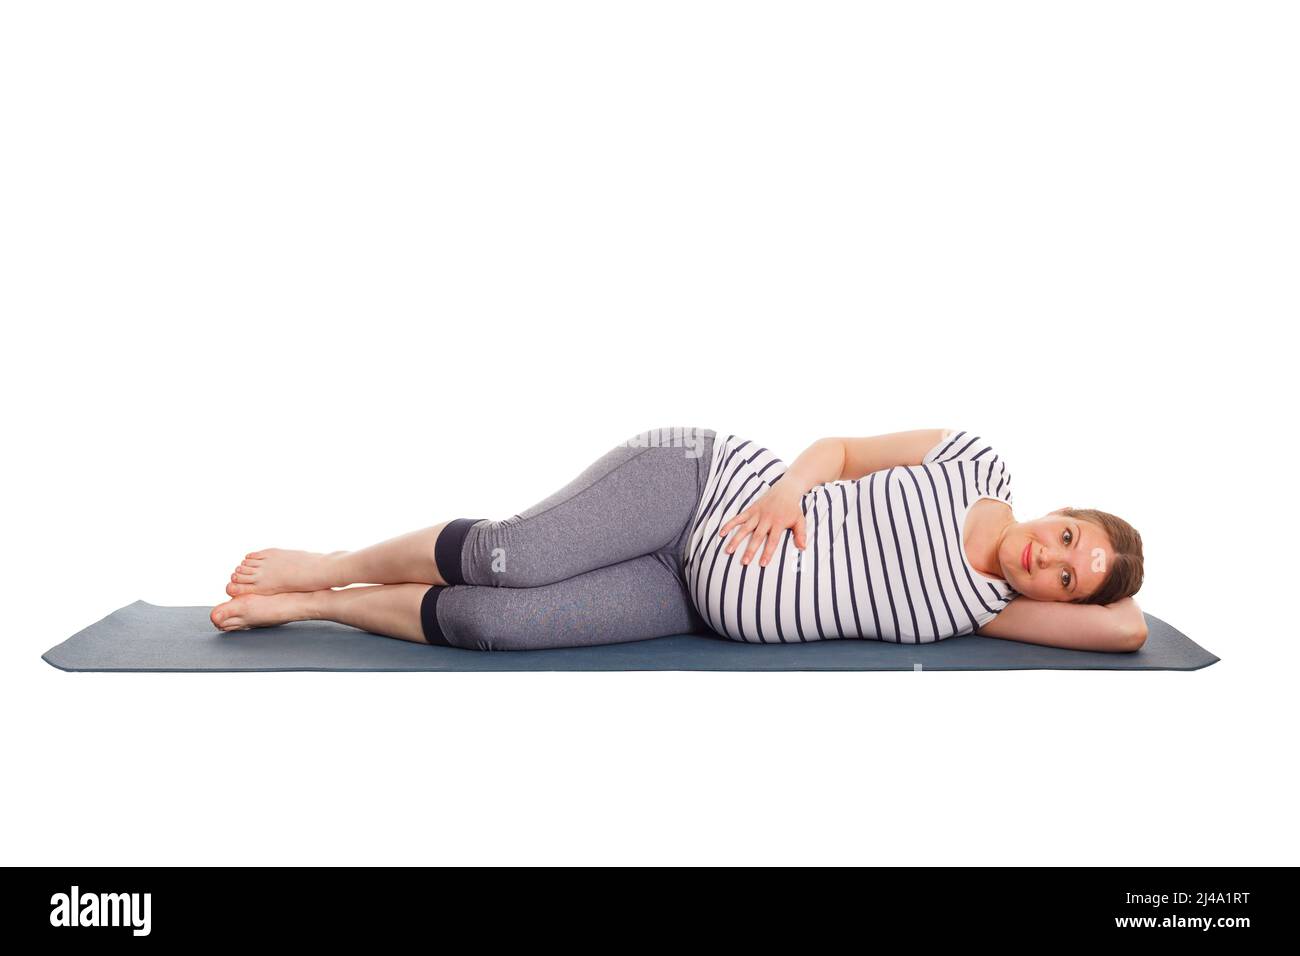 Pregnant woman doing yoga asana Parsva Savasana Stock Photo